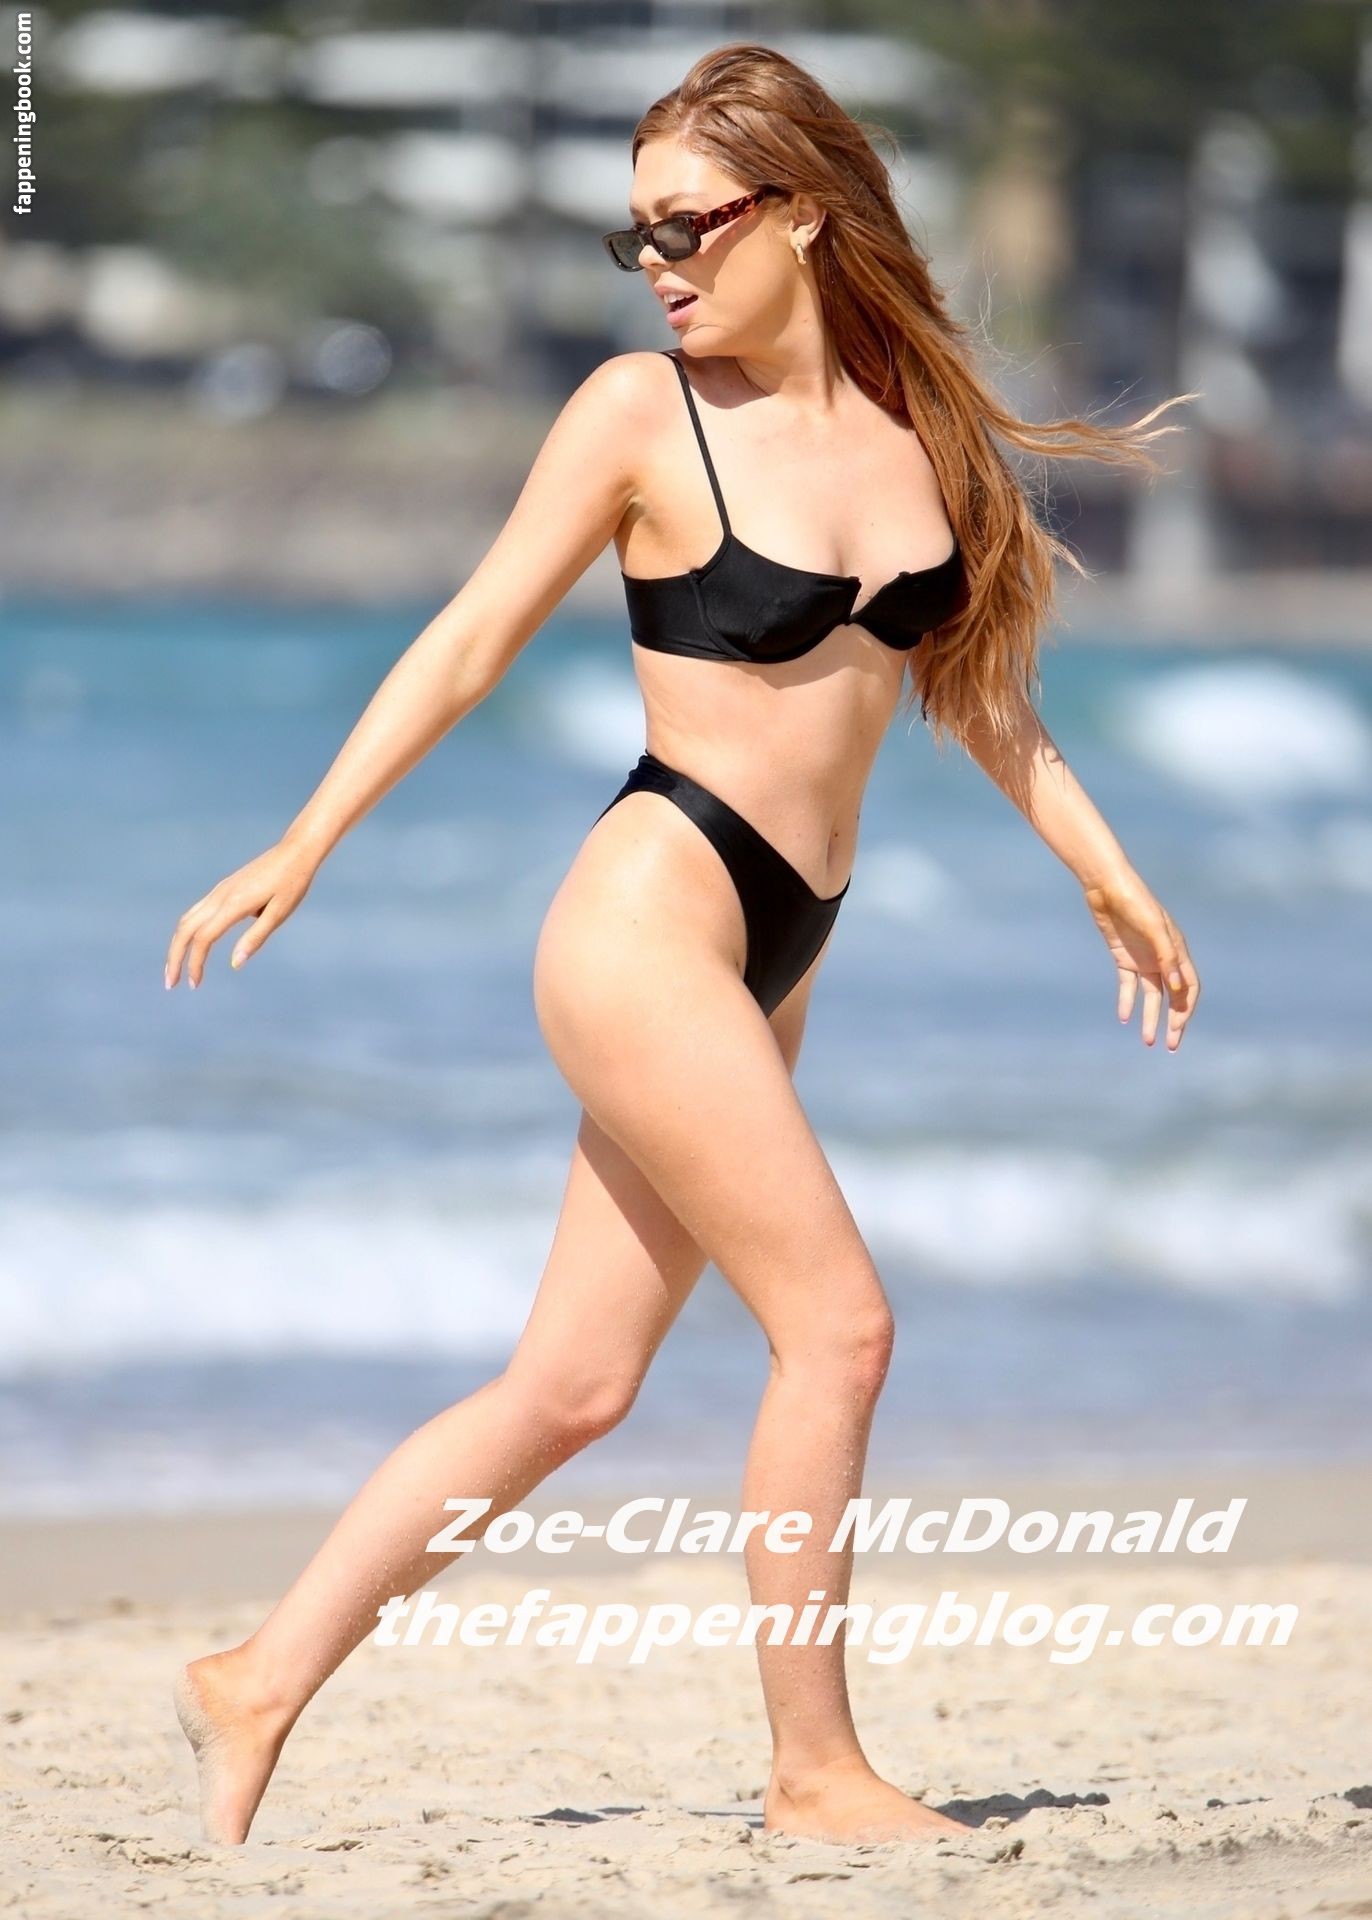 Zoe-Clare McDonald Nude